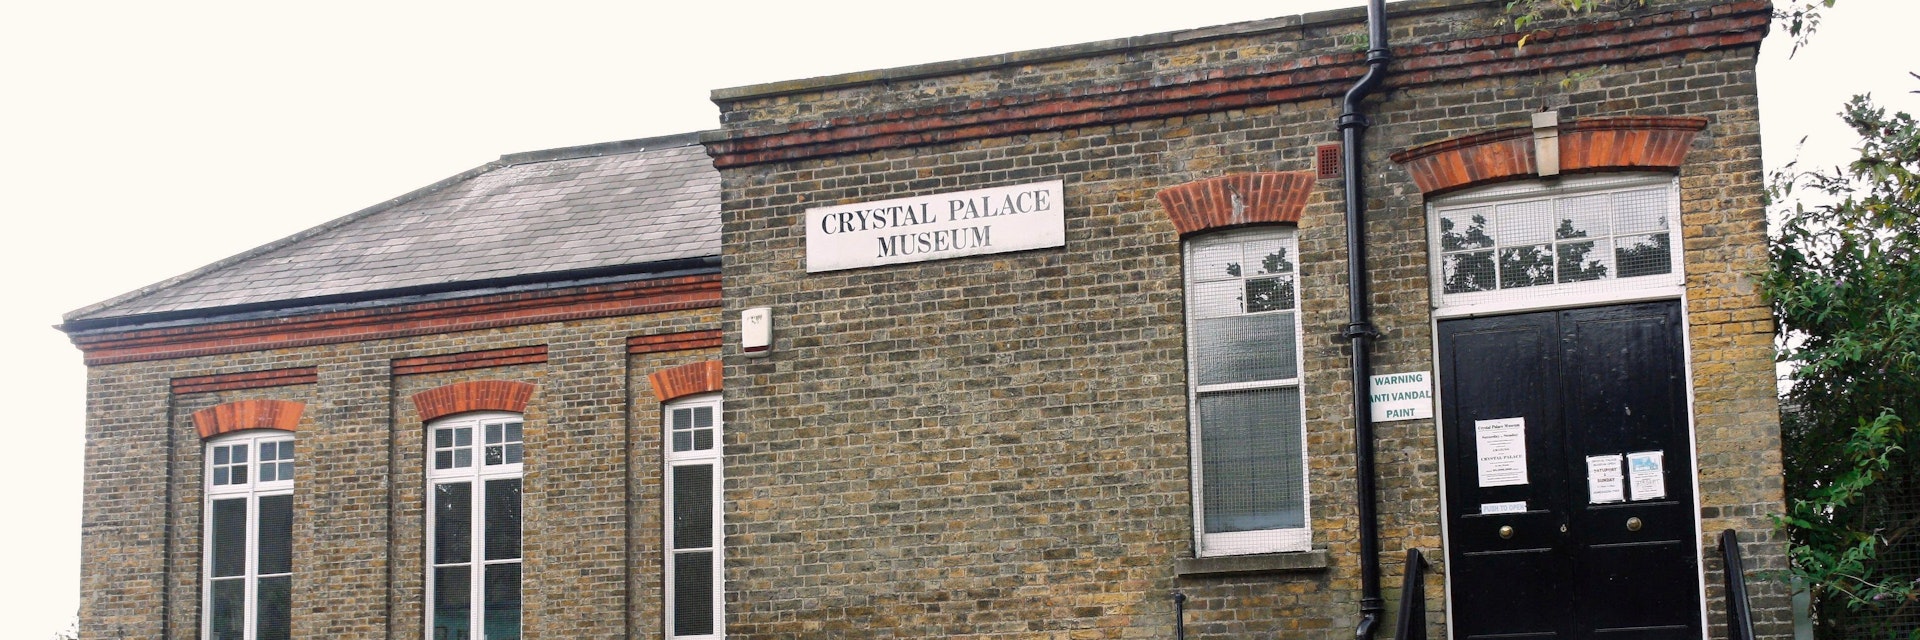 2GKC51C Crystal Palace Museum, South London, United Kingdom.